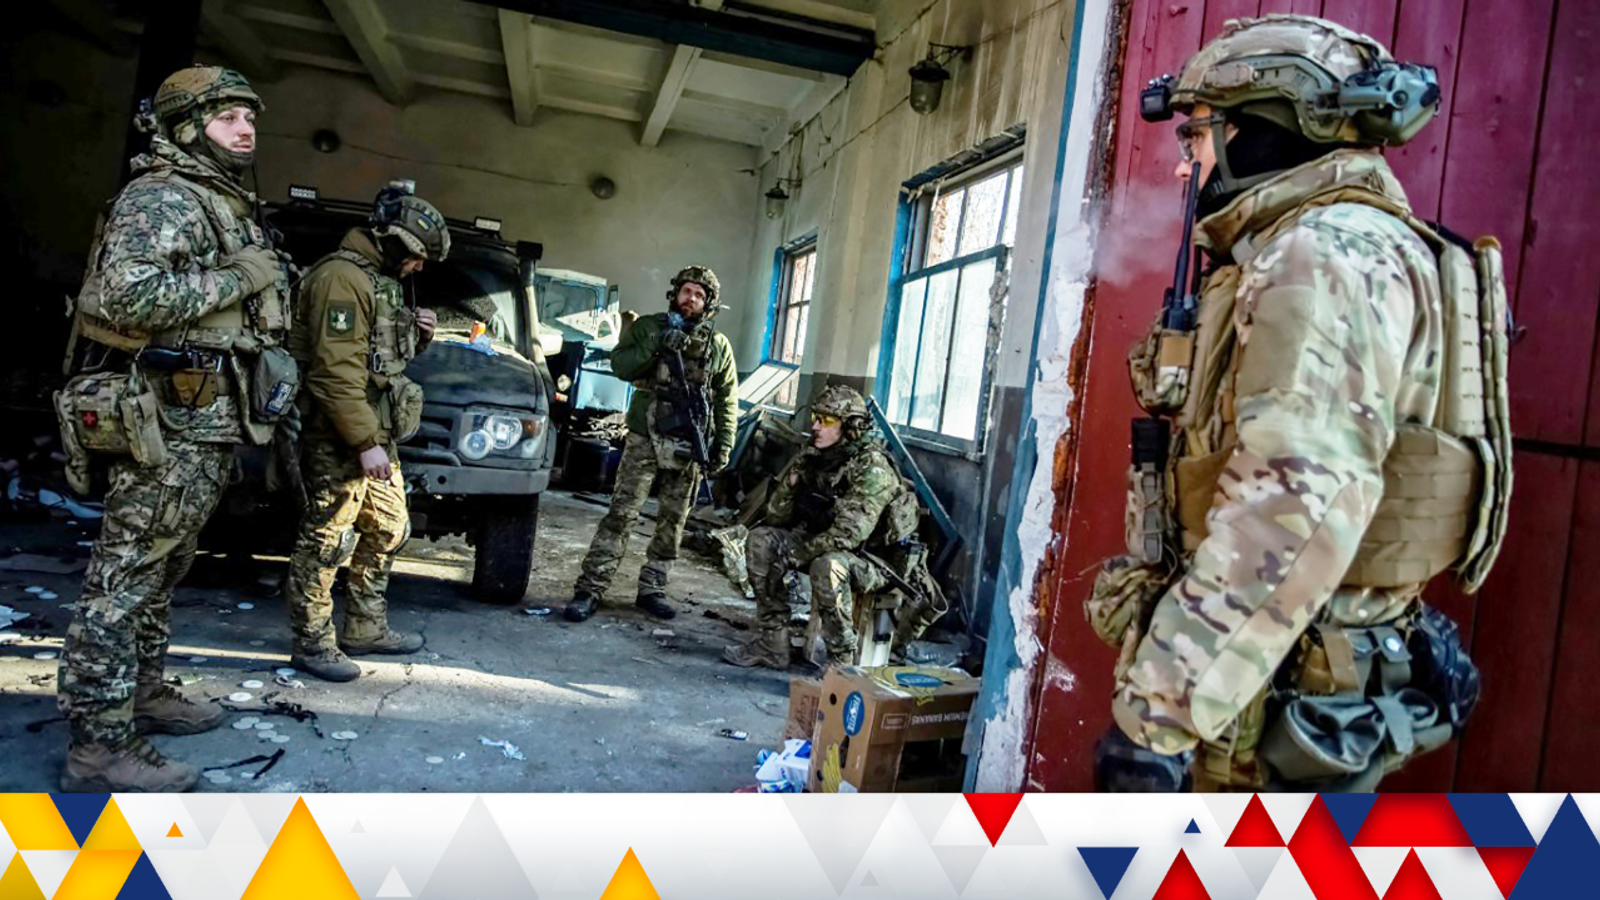 Ukraine preparing for major escalation by Russia, top Ukrainian security official tells Sky News | World News